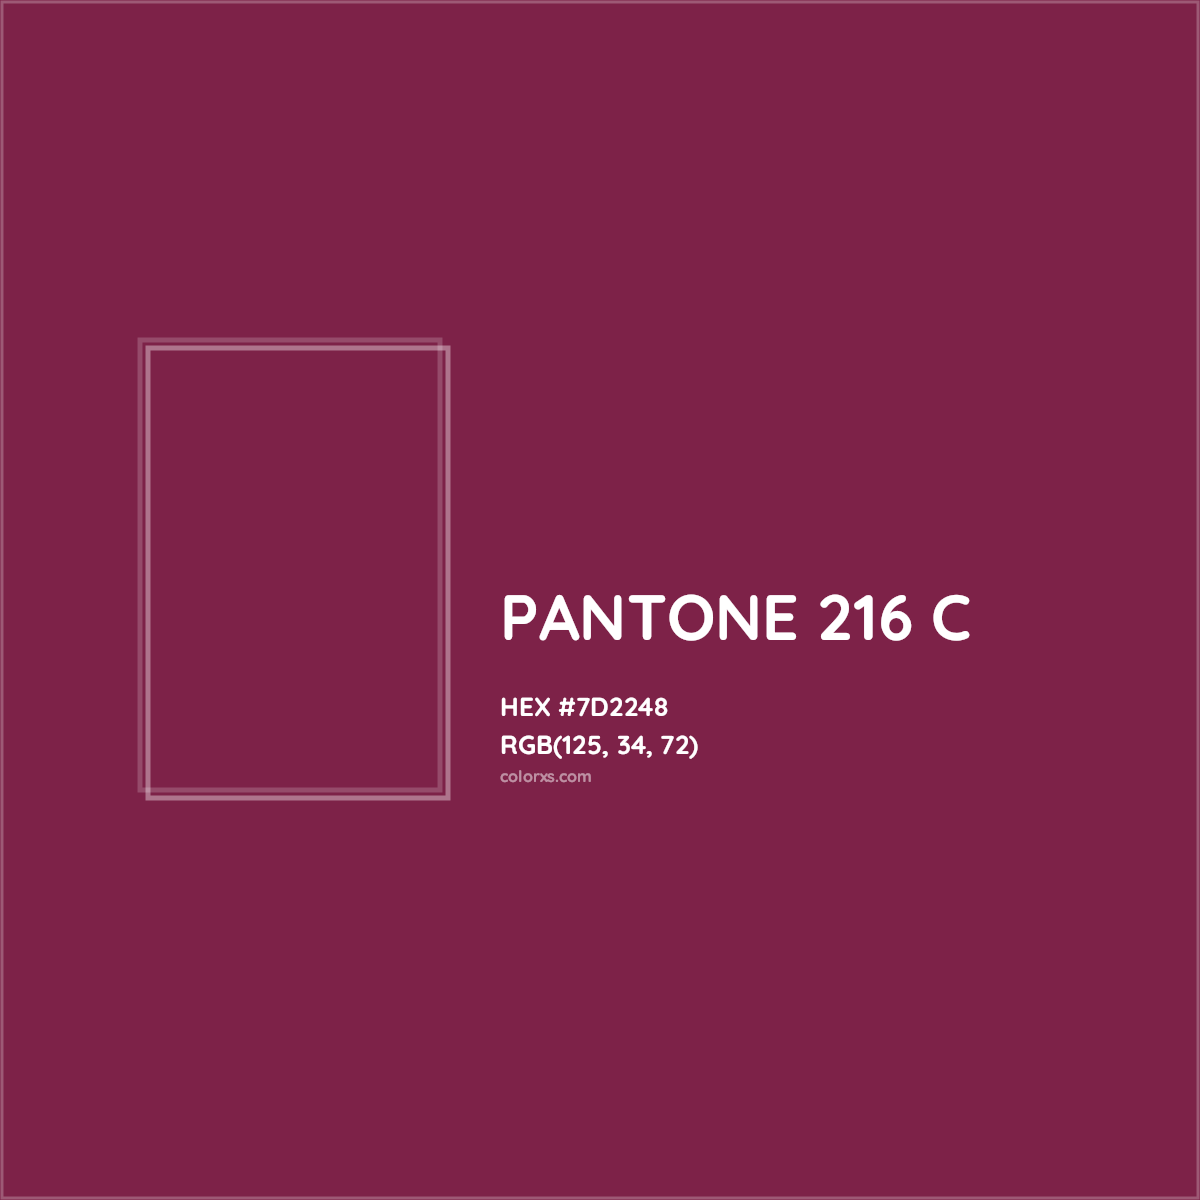 HEX #7D2248 PANTONE 216 C CMS Pantone PMS - Color Code